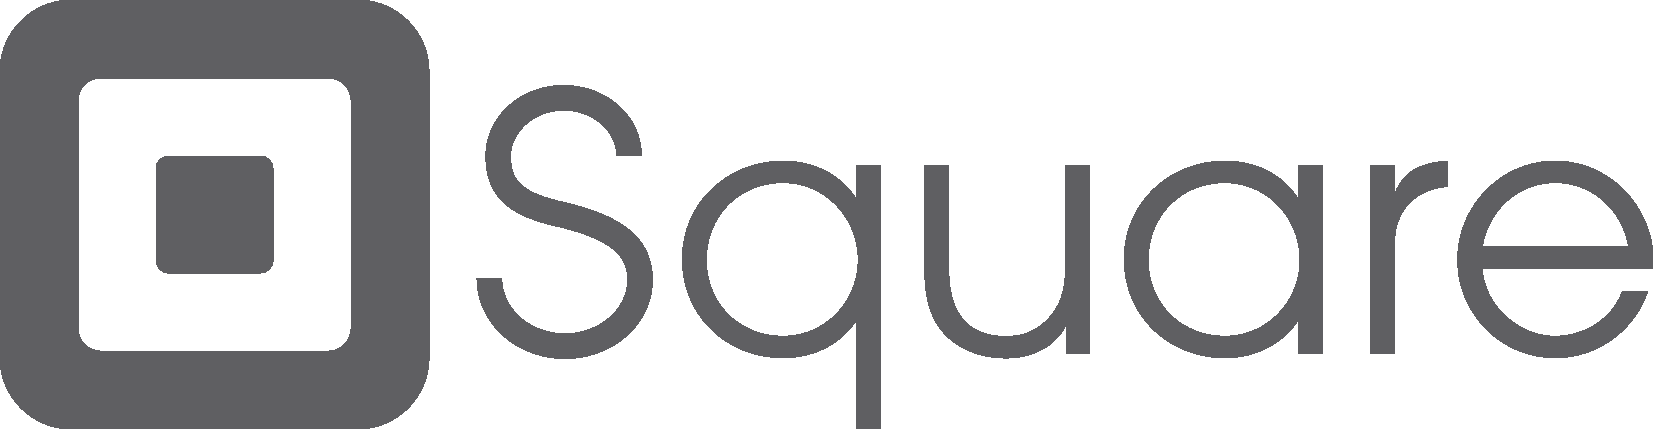 Square Logo Download Vector.